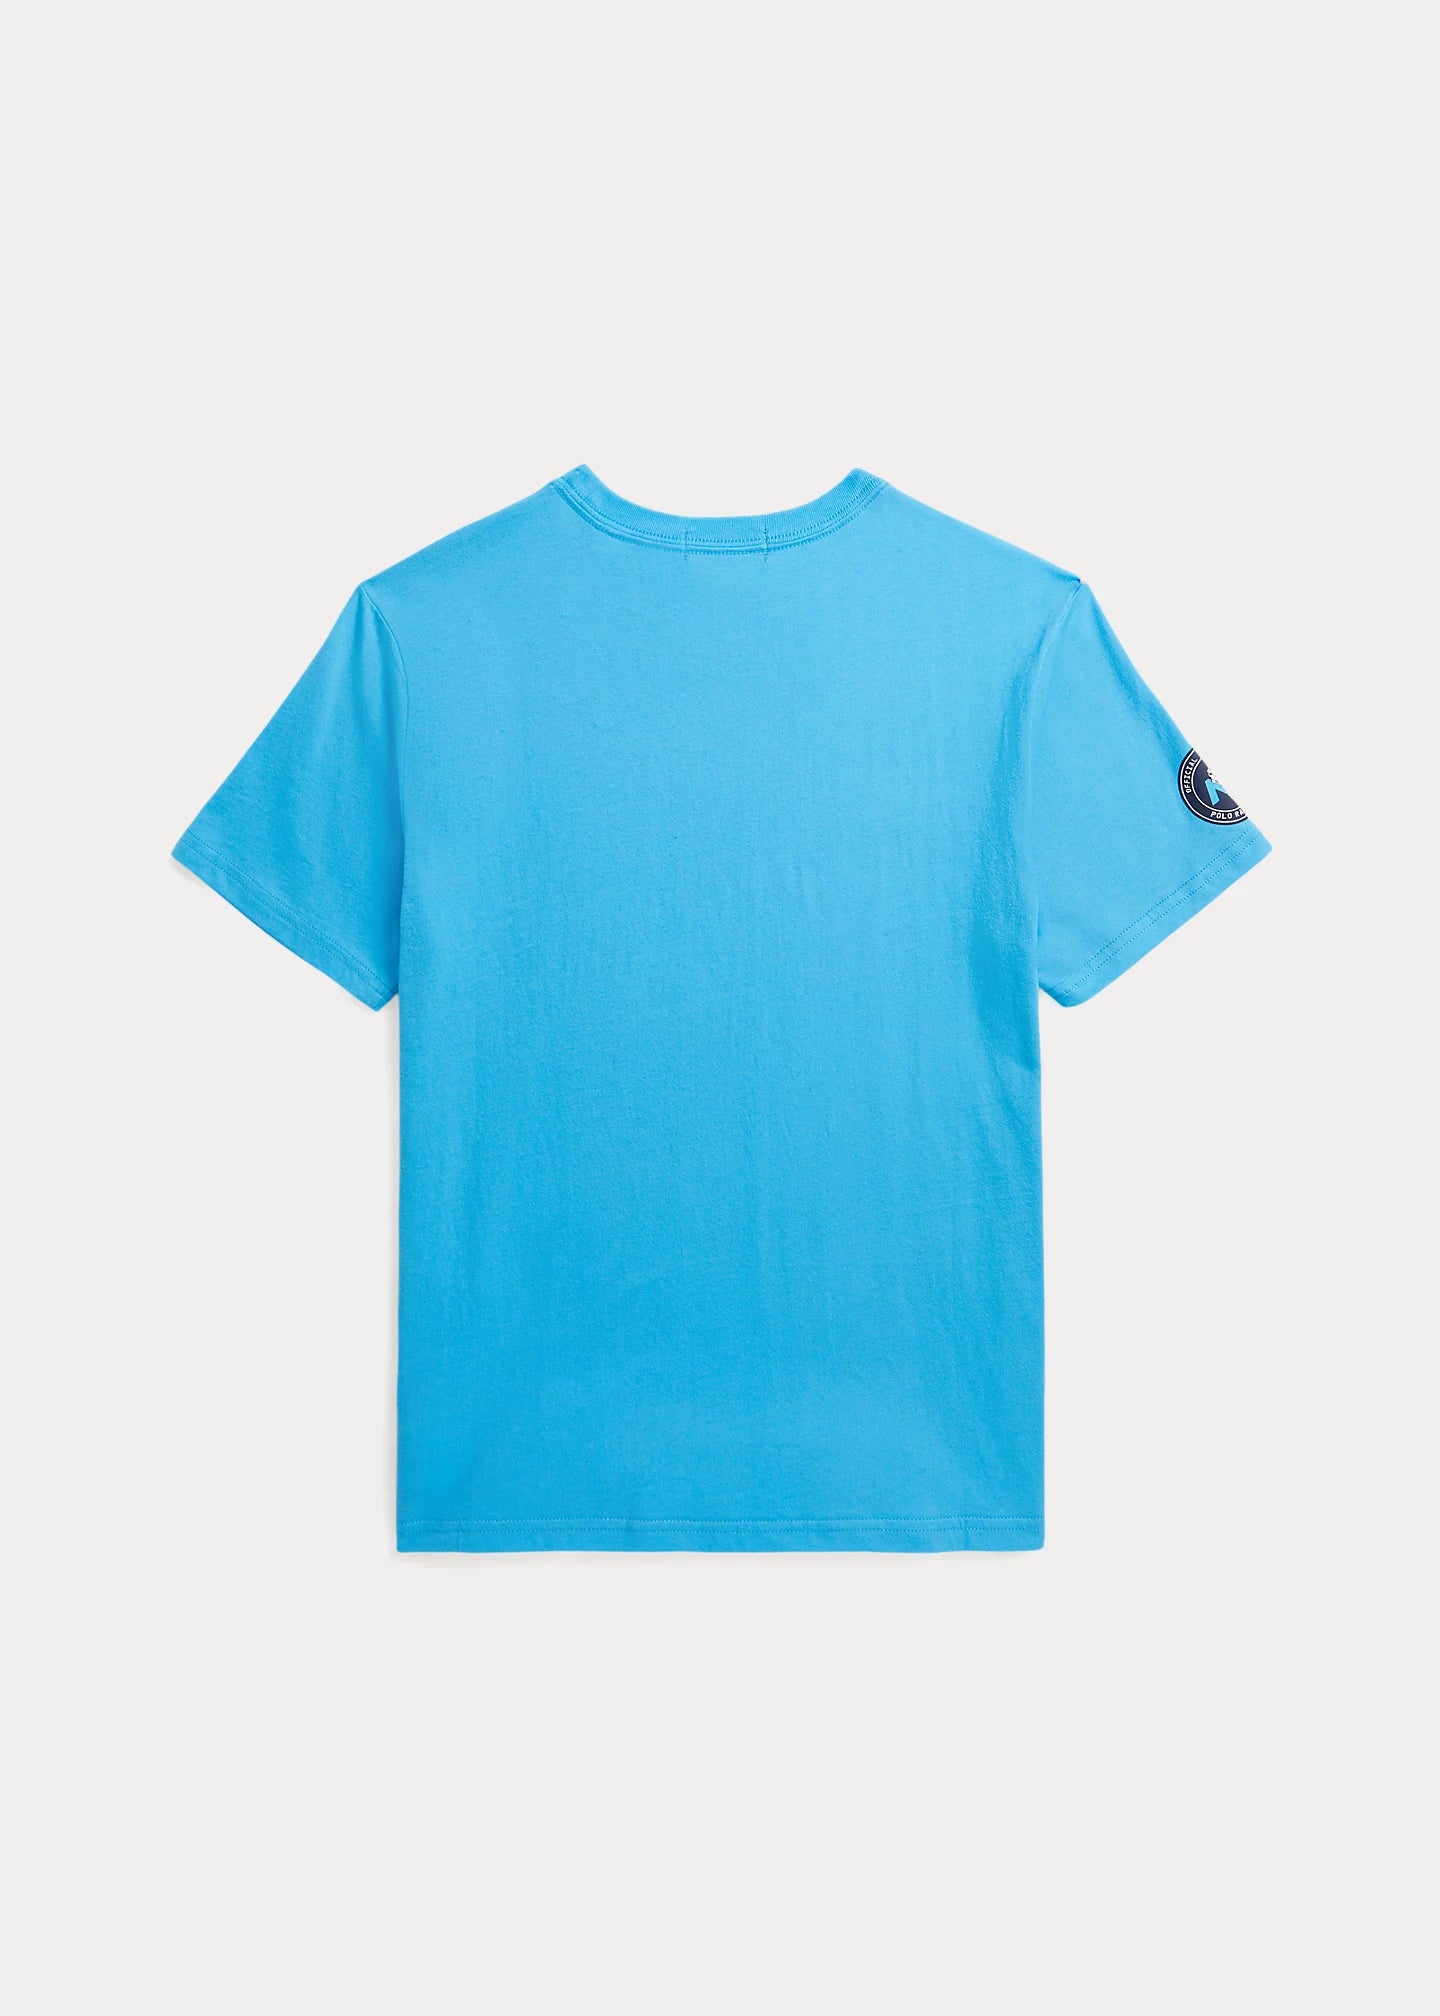 Blue Boy's T-Shirt Polo Horse Back View